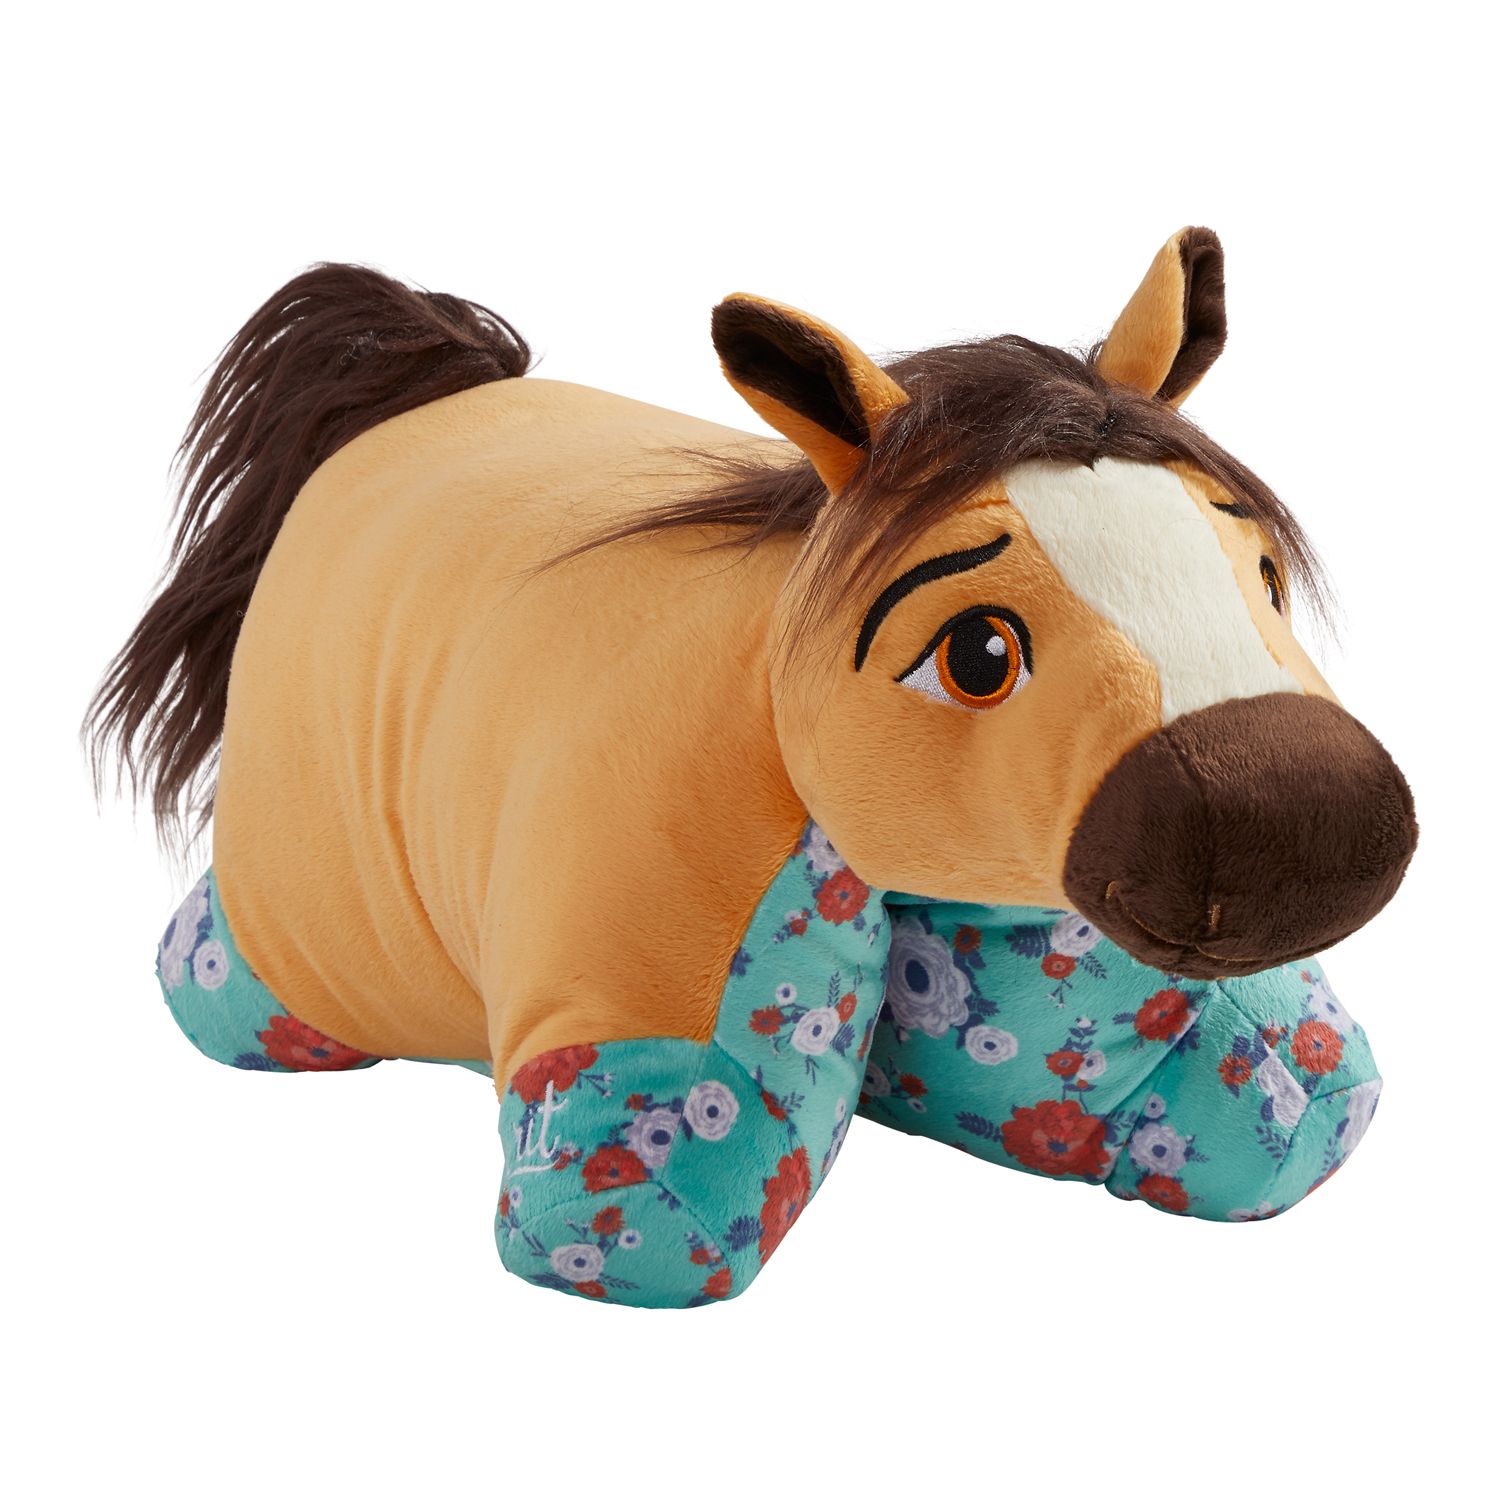 spirit the horse stuffed animal